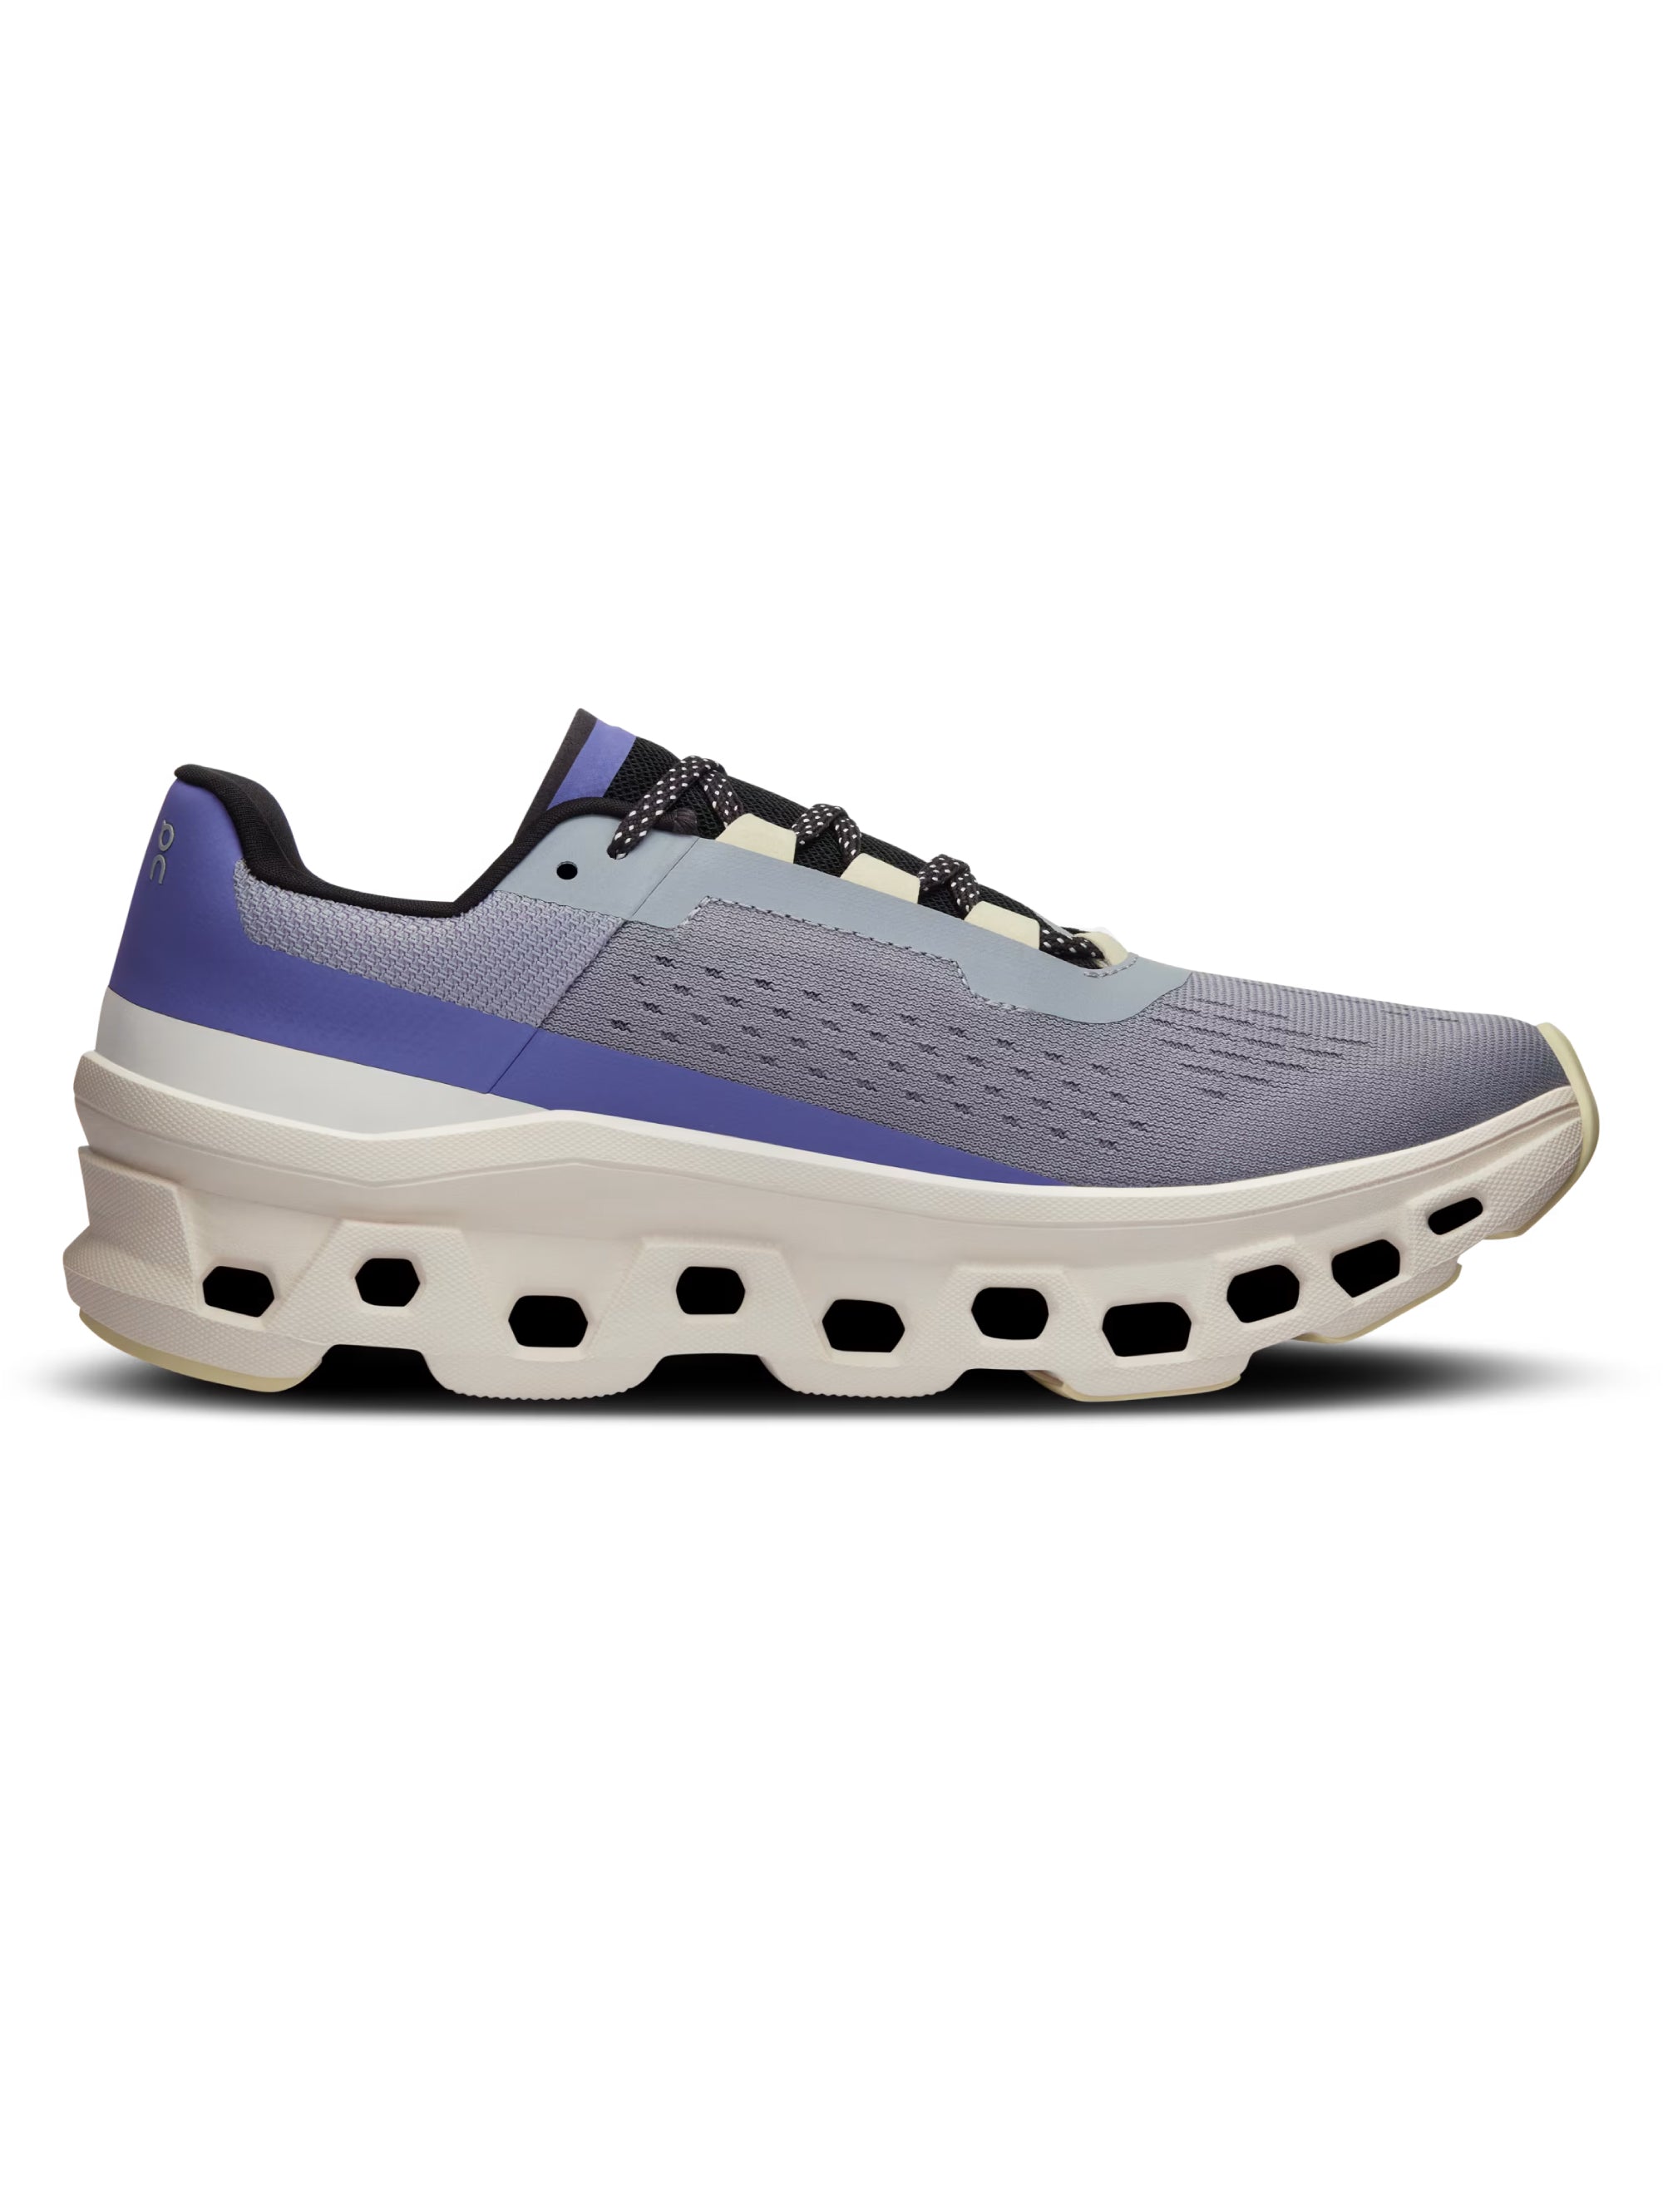 Blueberry Cloudmonster Men's Sneakers